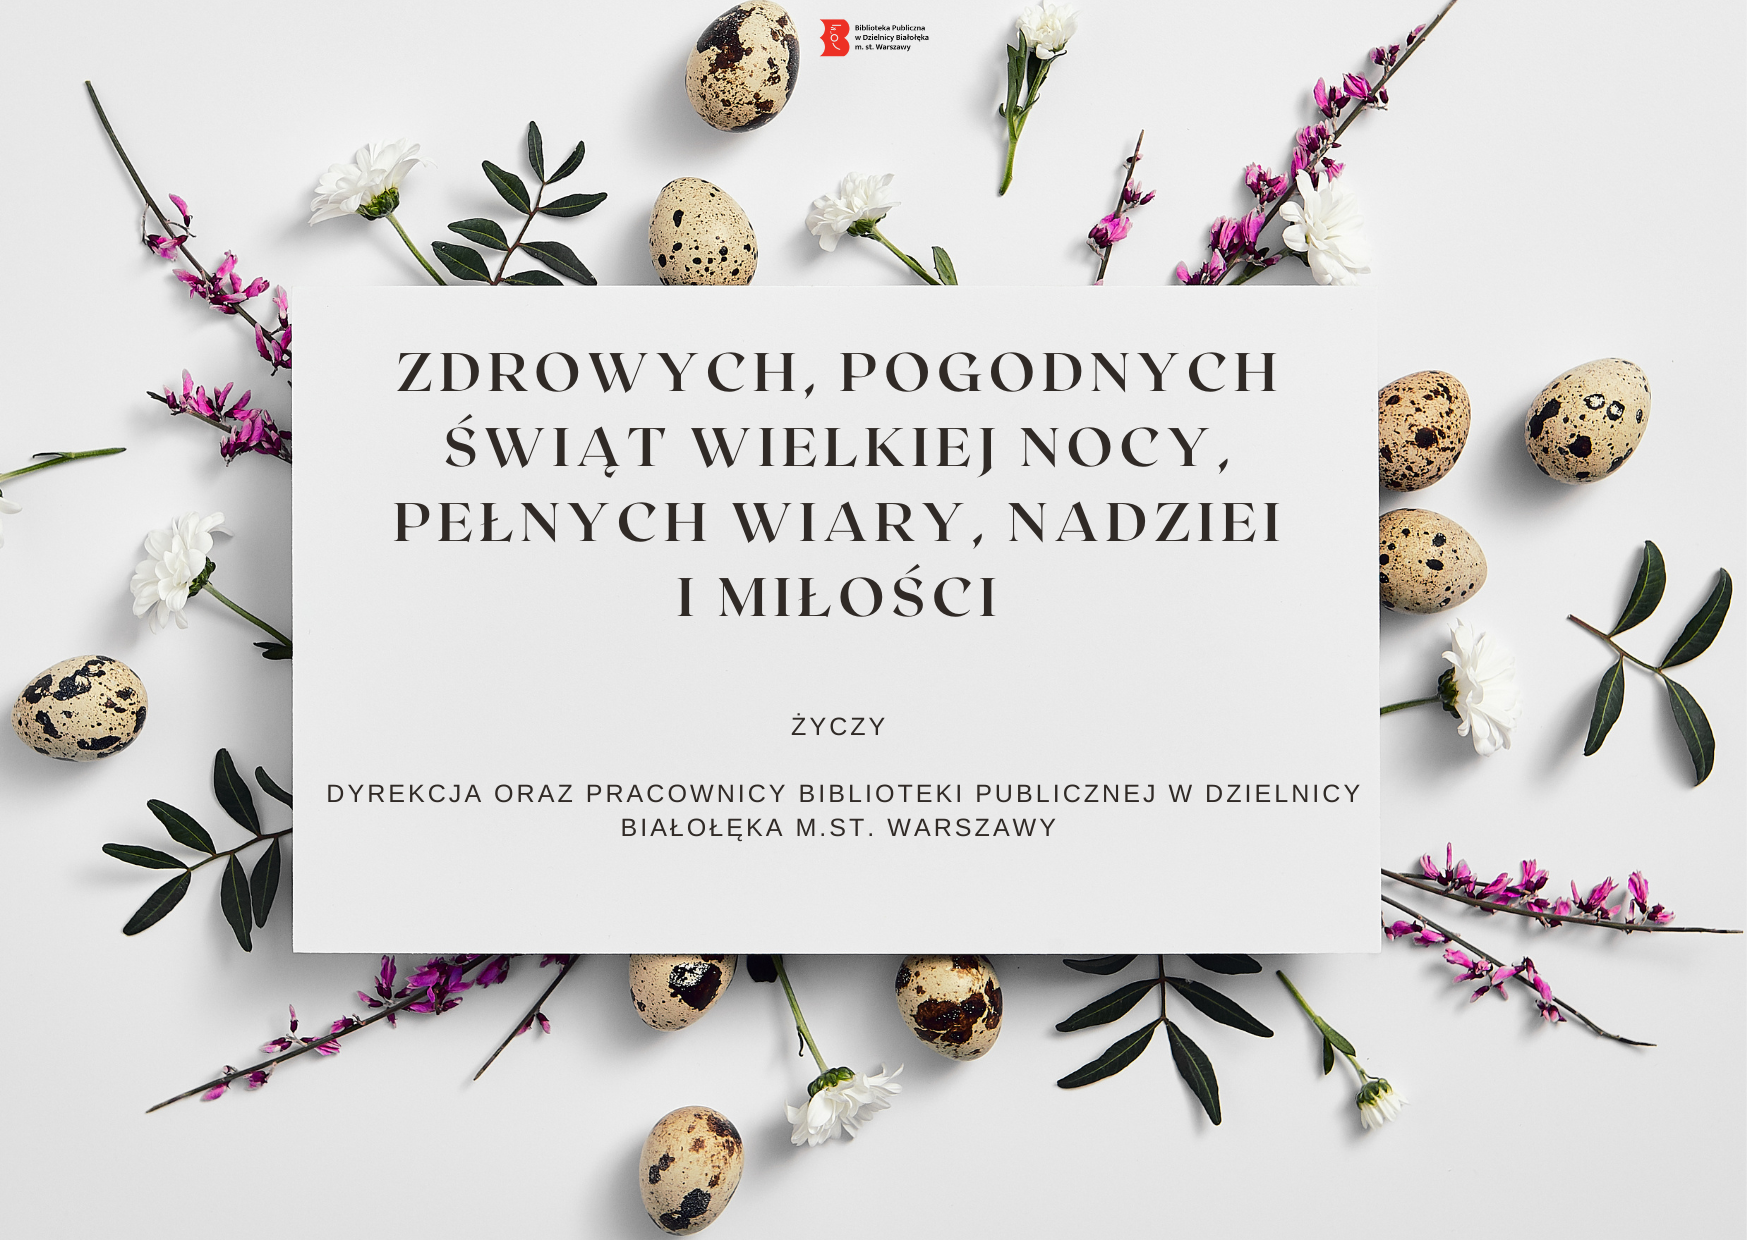 Read more about the article Radosnych Świąt Wielkanocnych!